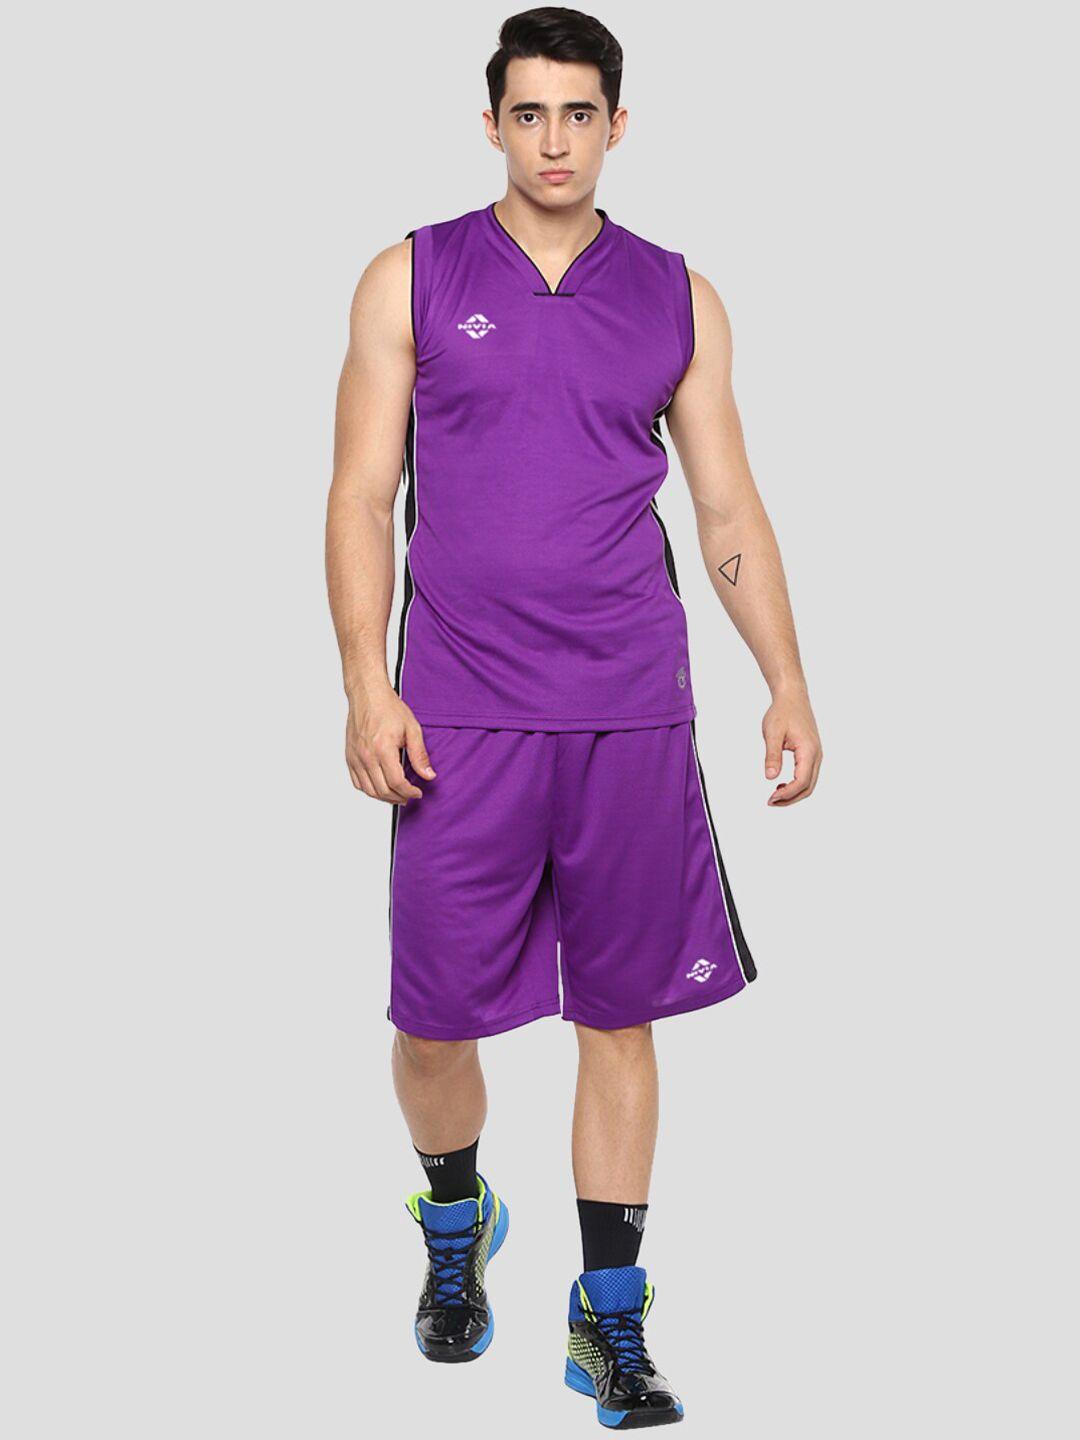 nivia panther sleeveless basketball jersey set